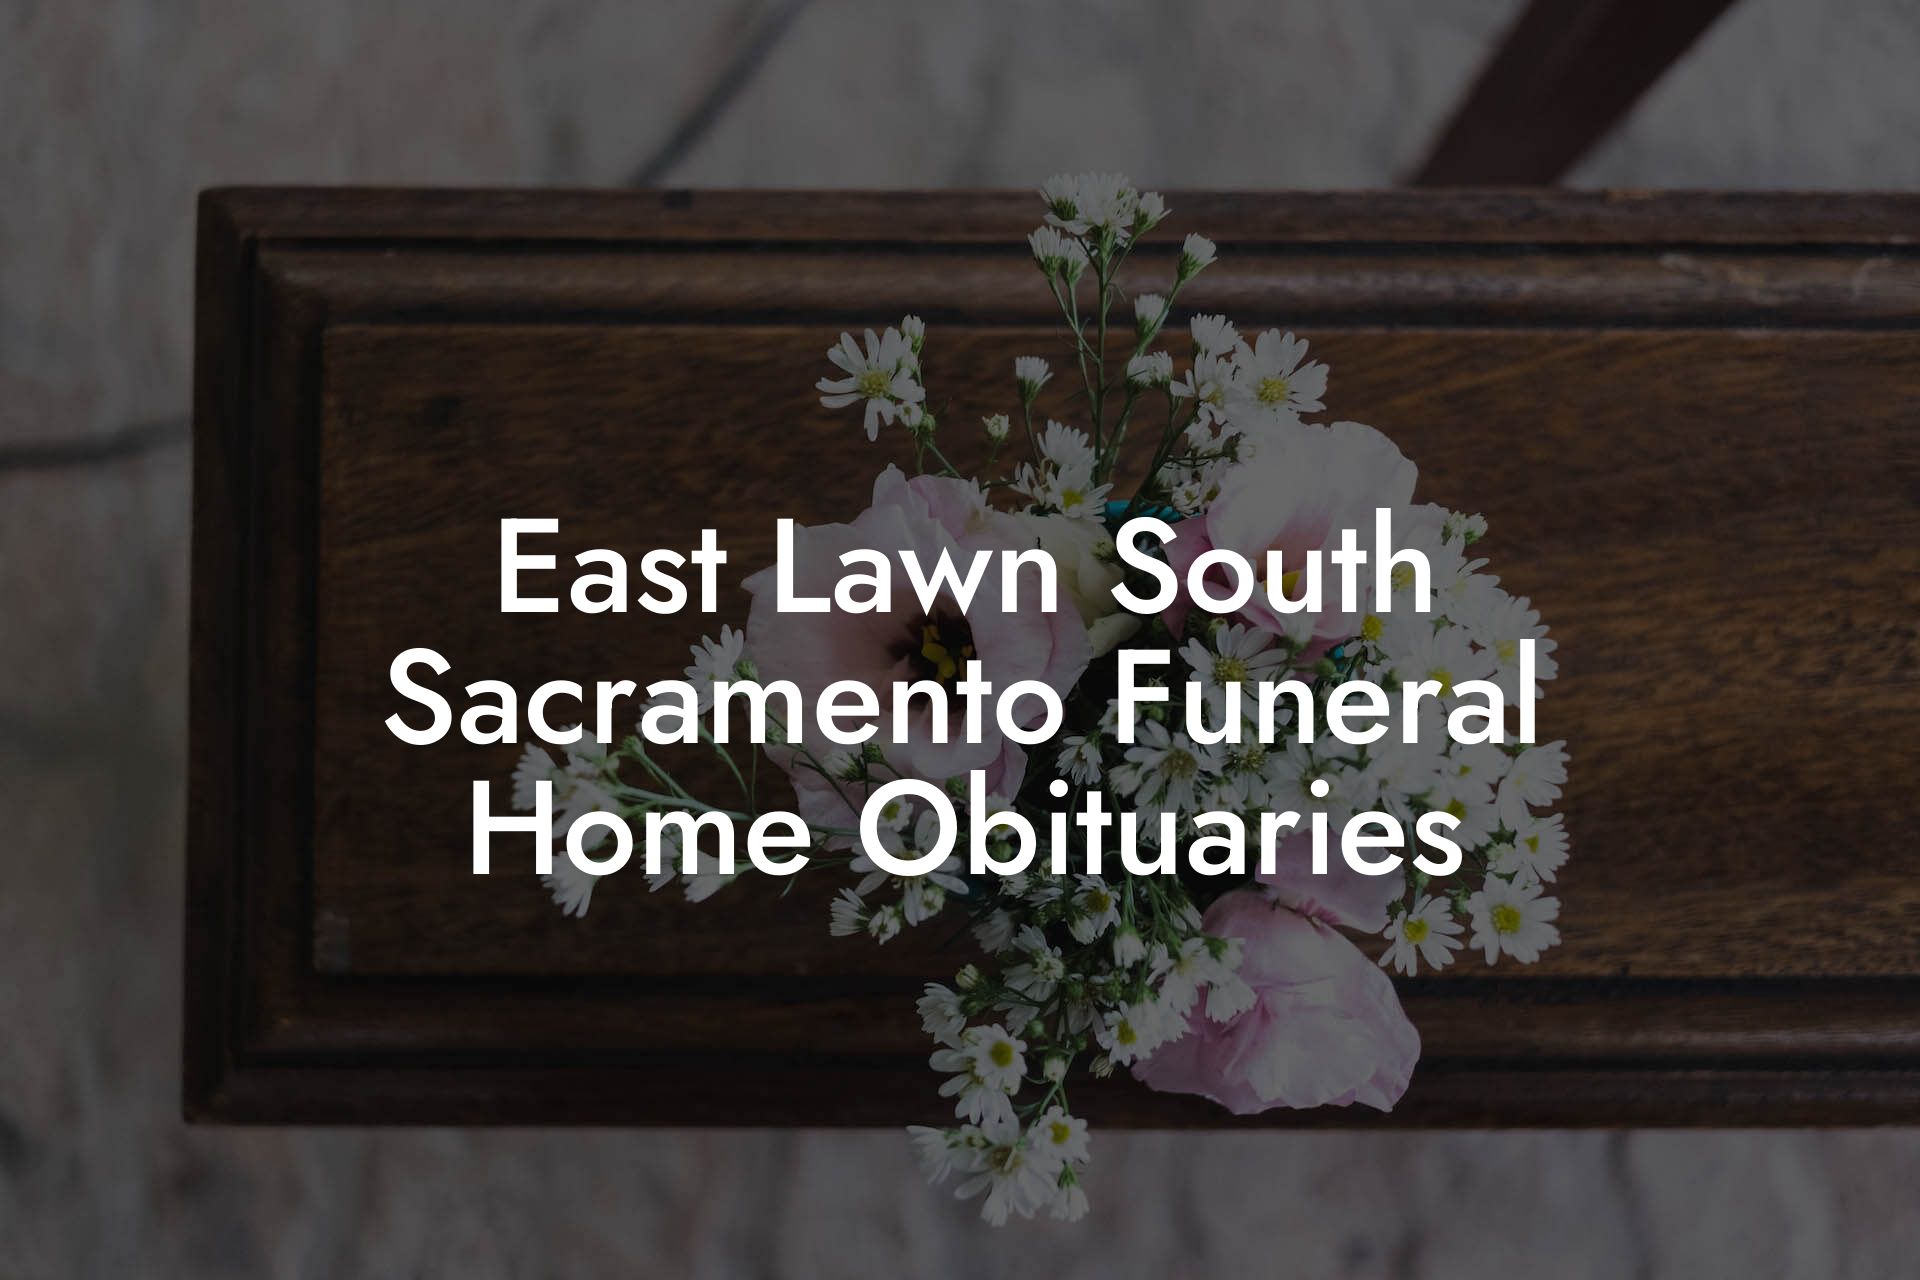 East Lawn South Sacramento Funeral Home Obituaries